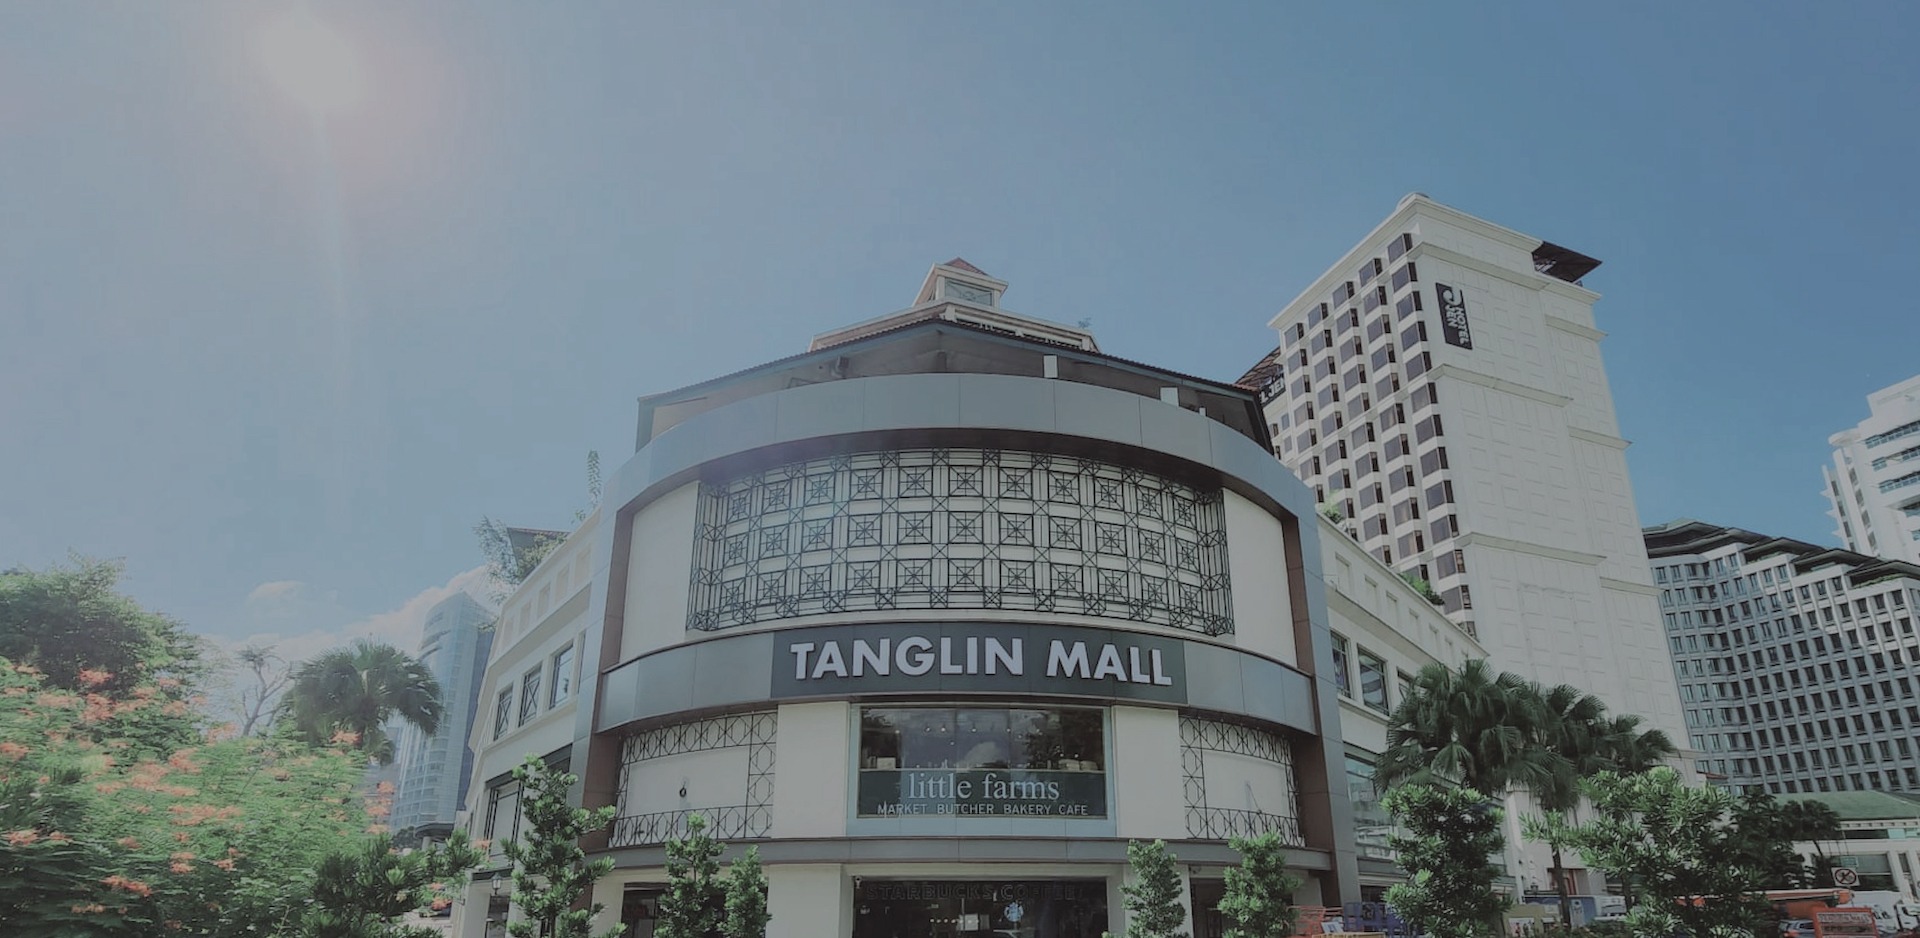 Tanglin Mall